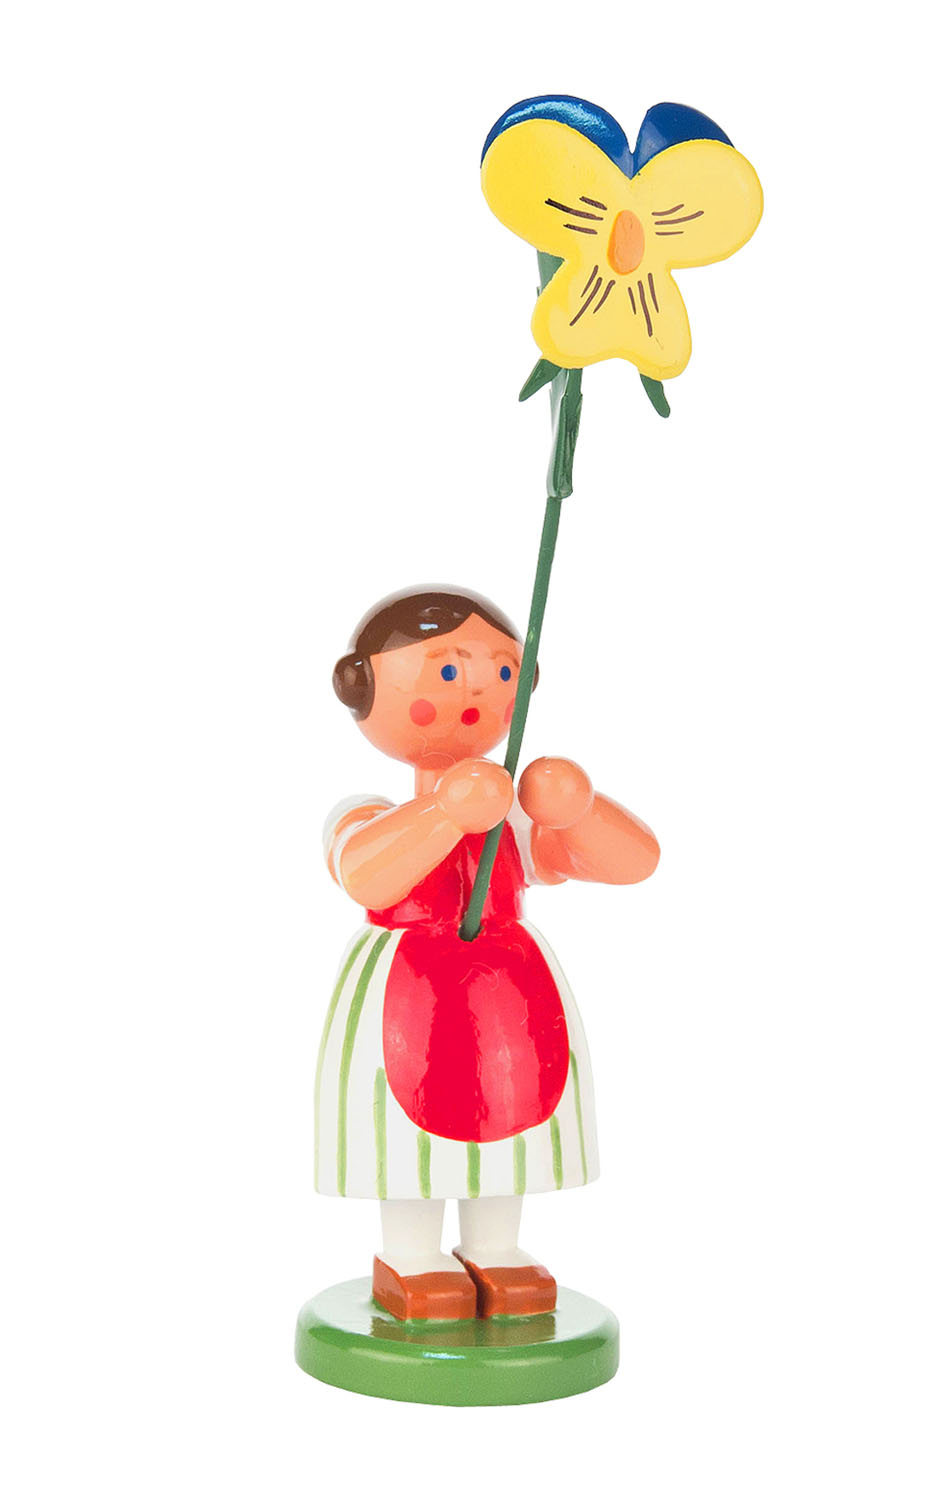 Dregeno Easter Figurine - Red Flower Girl - 4.5"H x 1.25"W x 1.25"D